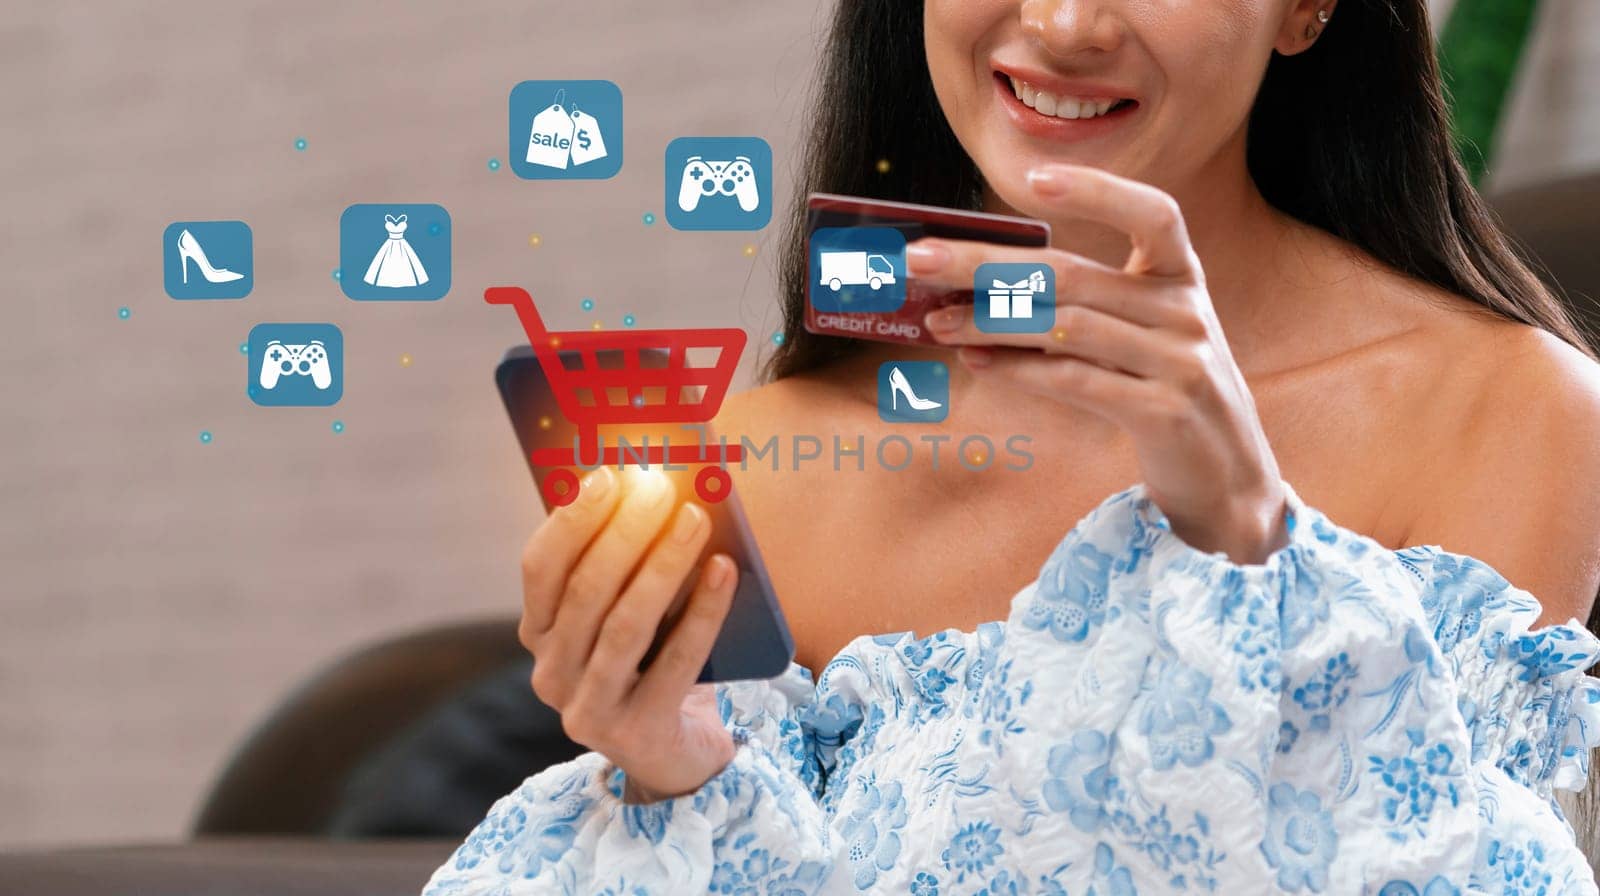 Elegant customer wearing blue dress controlling device choosing online platform. Smart consumer watching gadget opening e-commerce application using cashless technology shopping inventory. Cybercash.